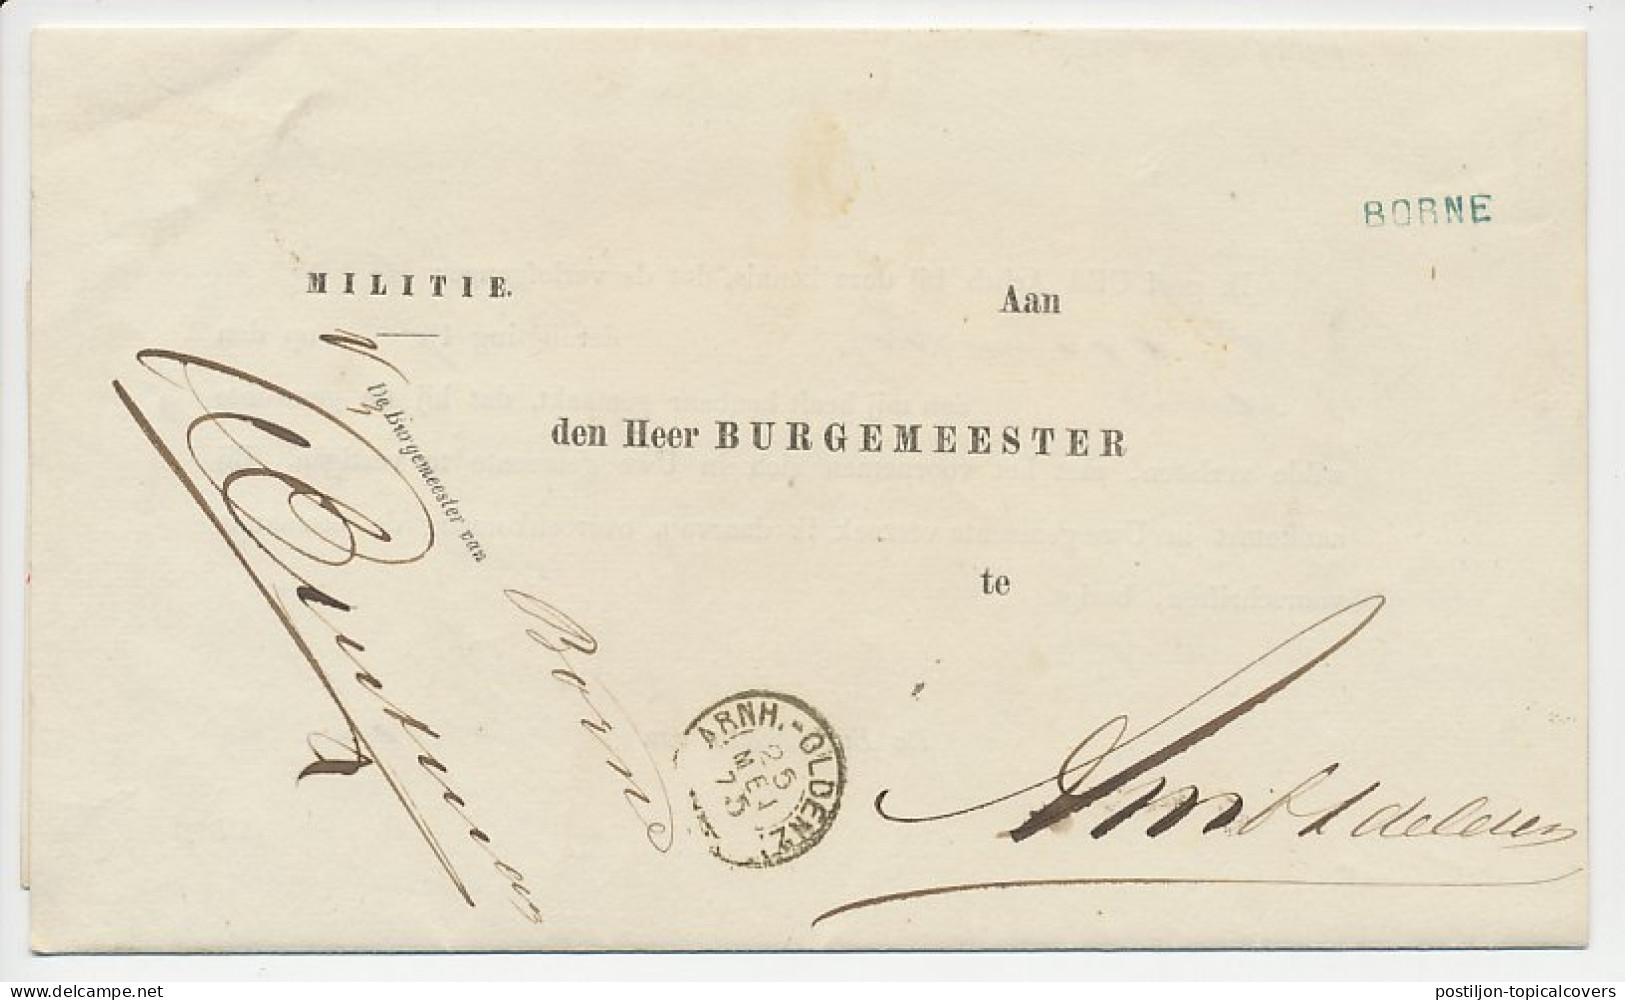 Borne - Trein Takjestempel Arnhem - Oldenzaal 1875 - Briefe U. Dokumente